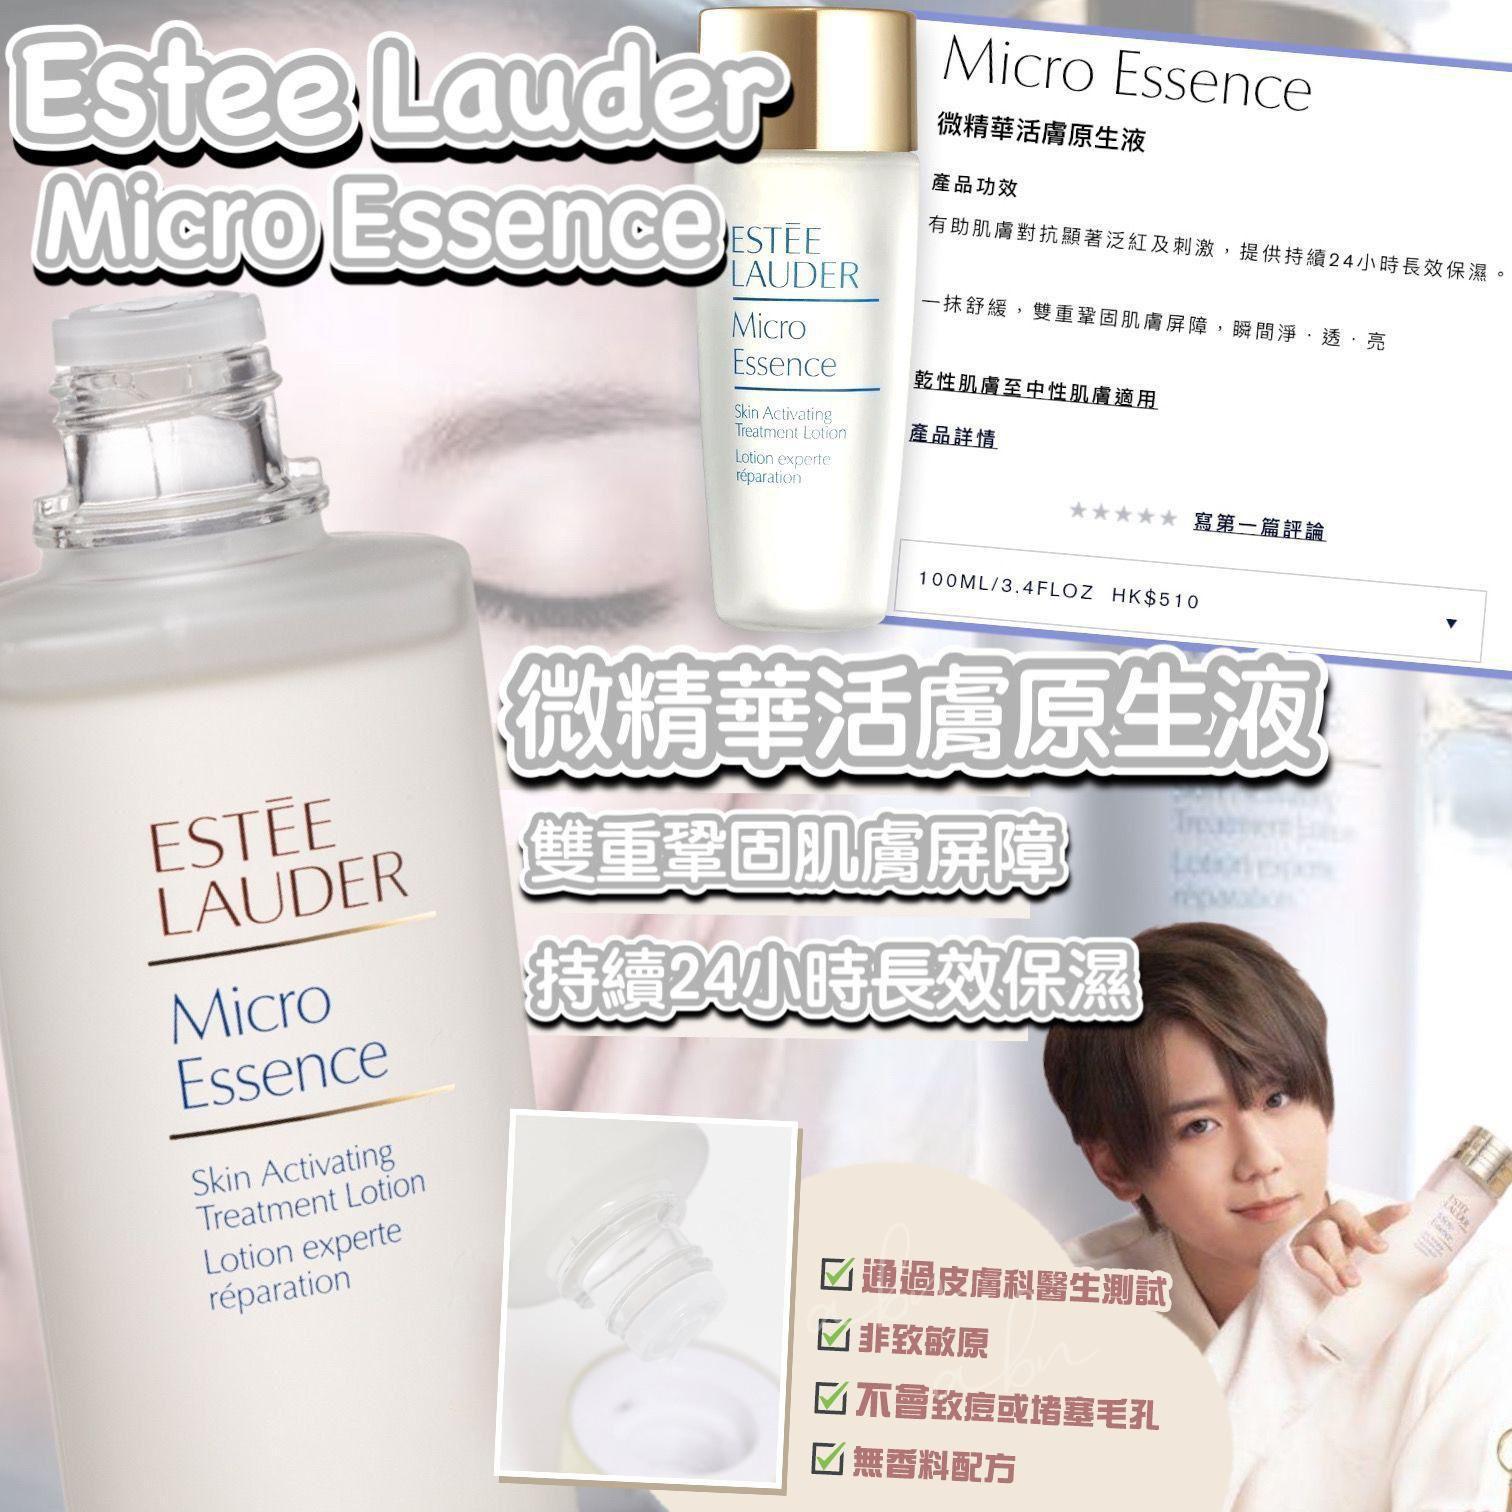 Estée Lauder Micro Essence 微精華活膚原生液 30ml - 約10月中旬到貨